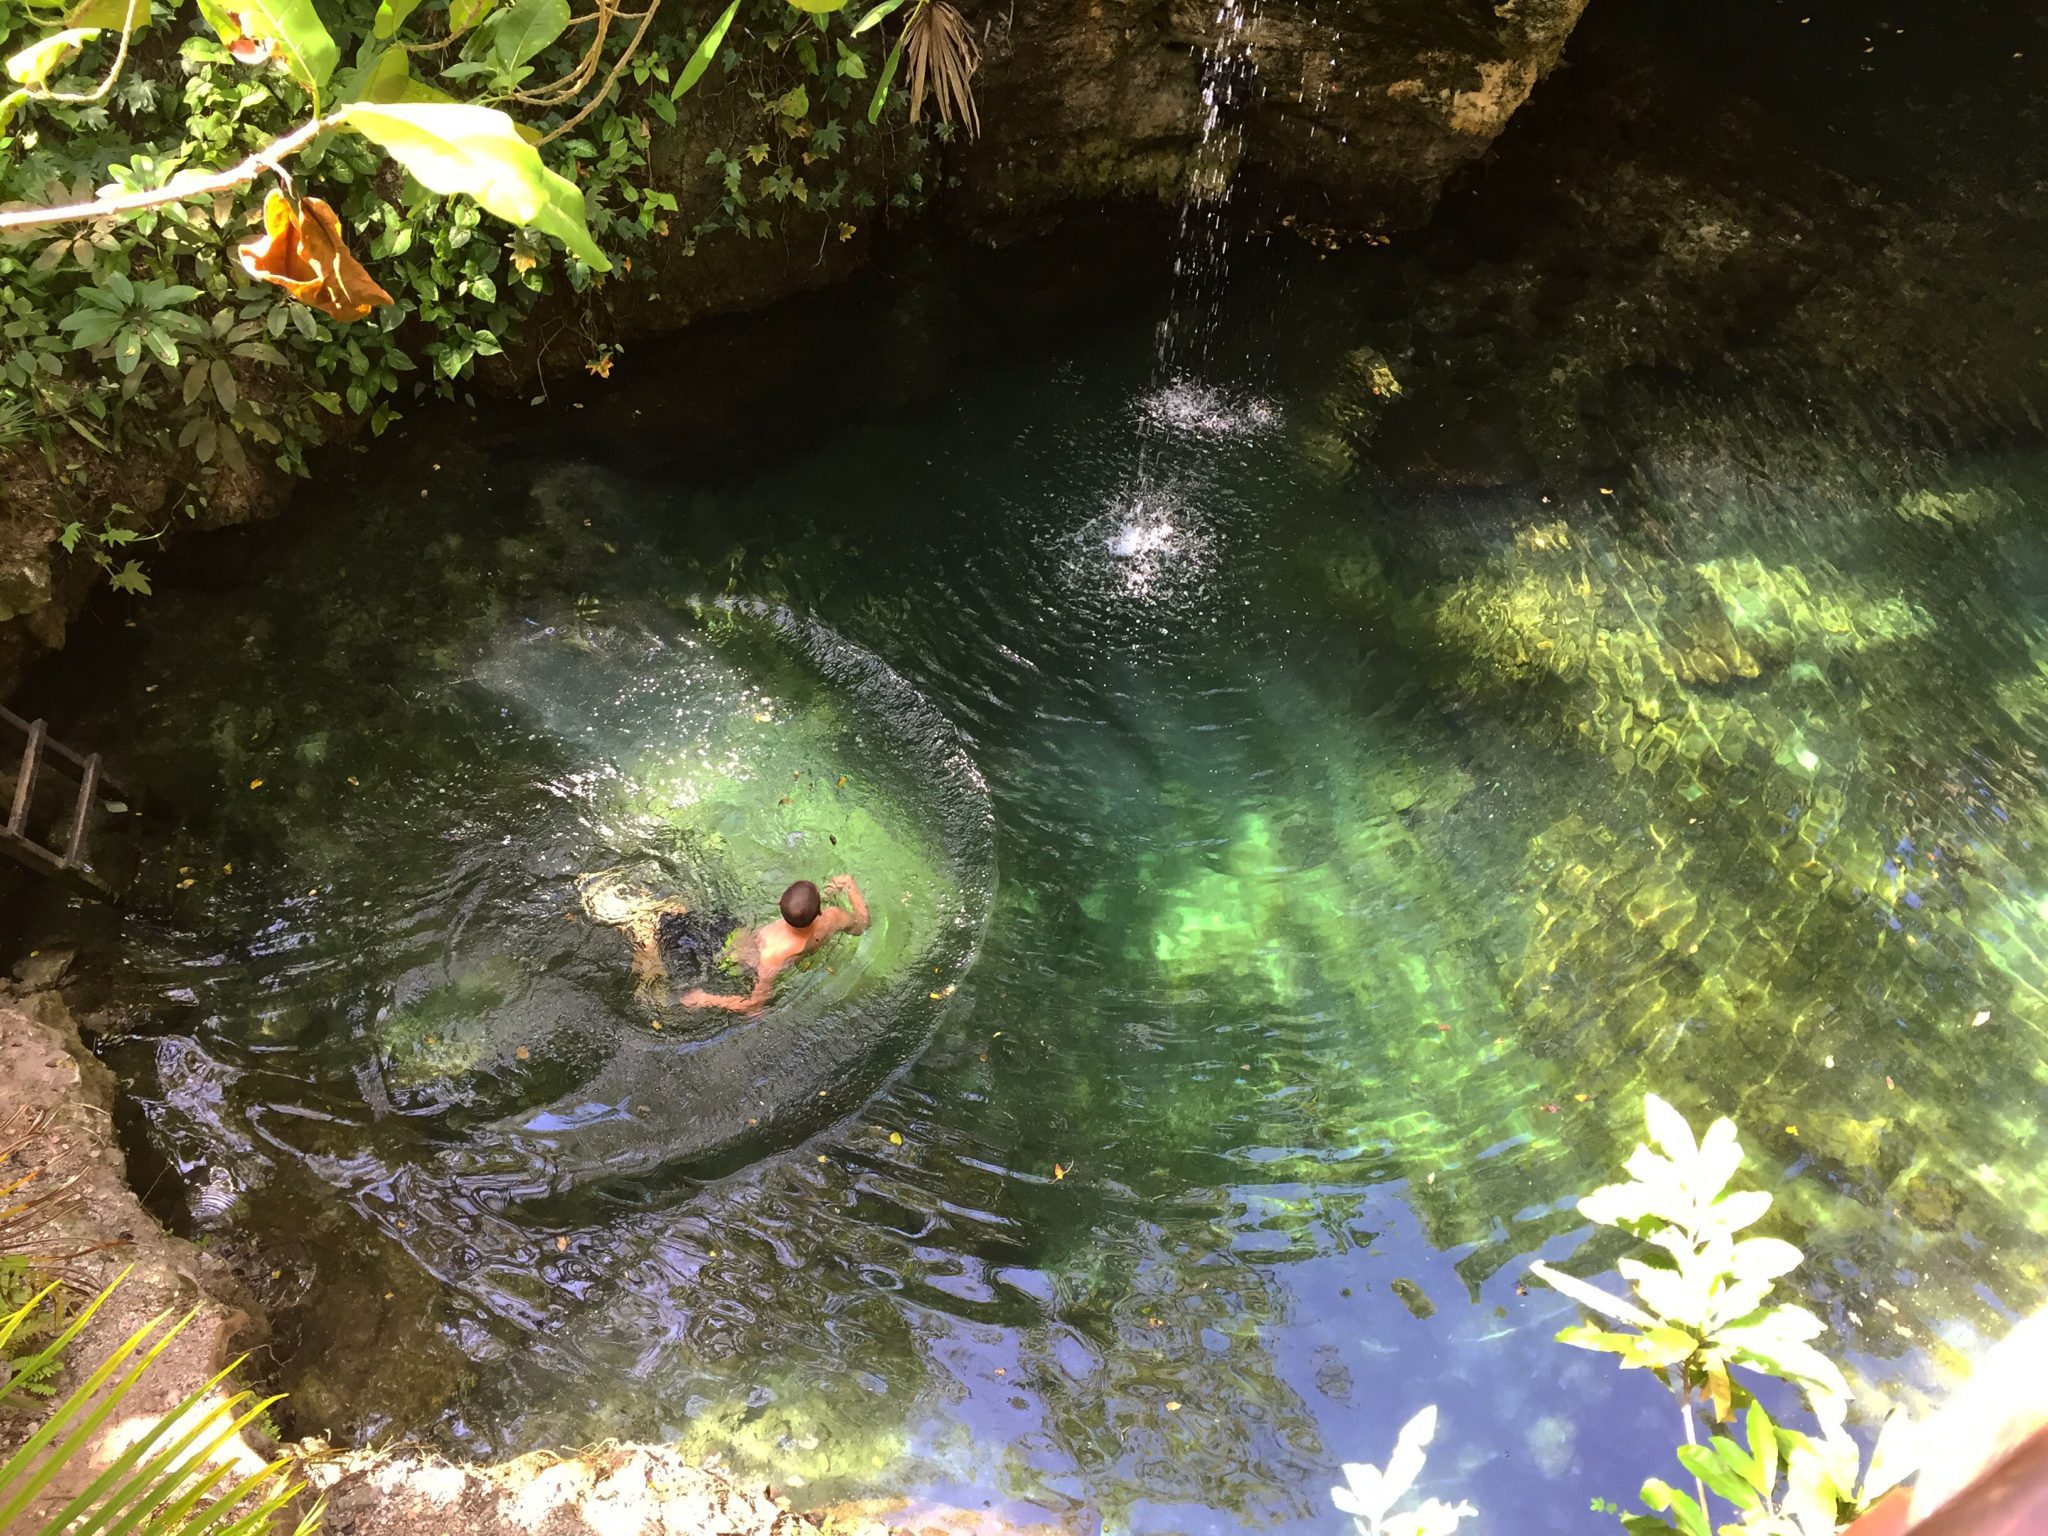 Best Cenotes near Playa del Carmen- Top 7 Playa del Carmen activities #playadelcarmen #mexico #cenote #simplywander